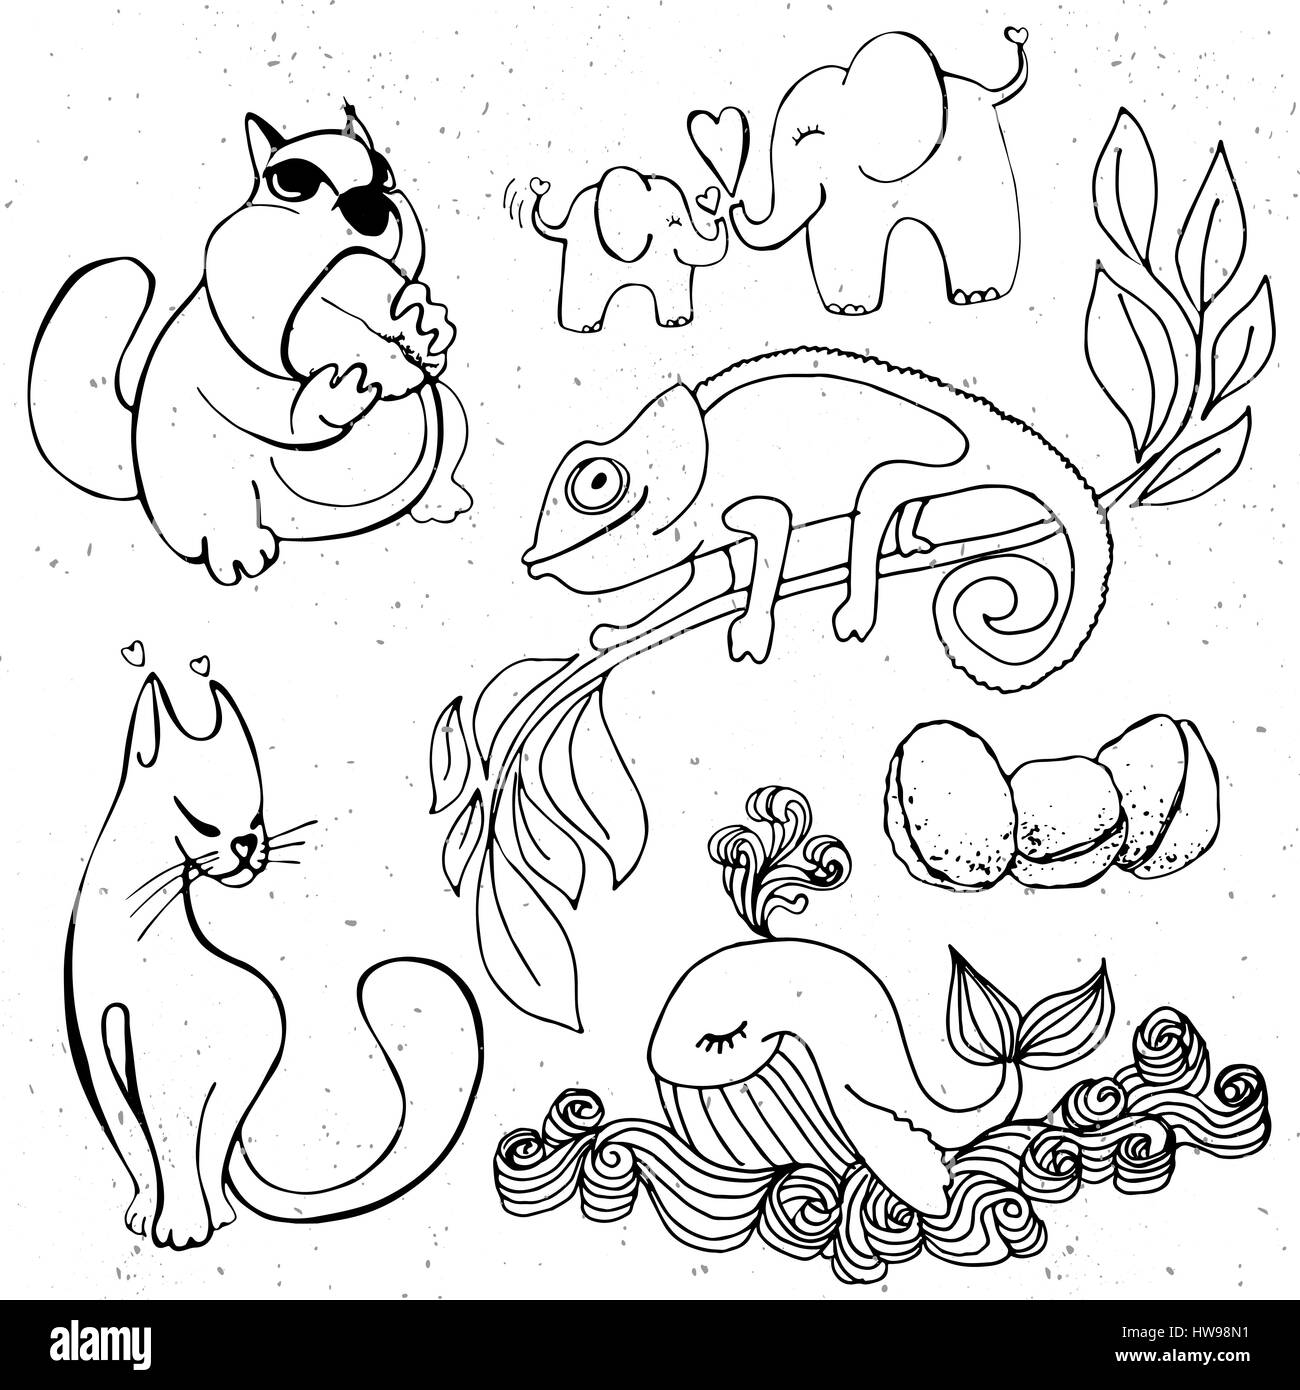 Cute animals silhouette - cartoon hamster, whale, elephant, chameleon Stock Vector